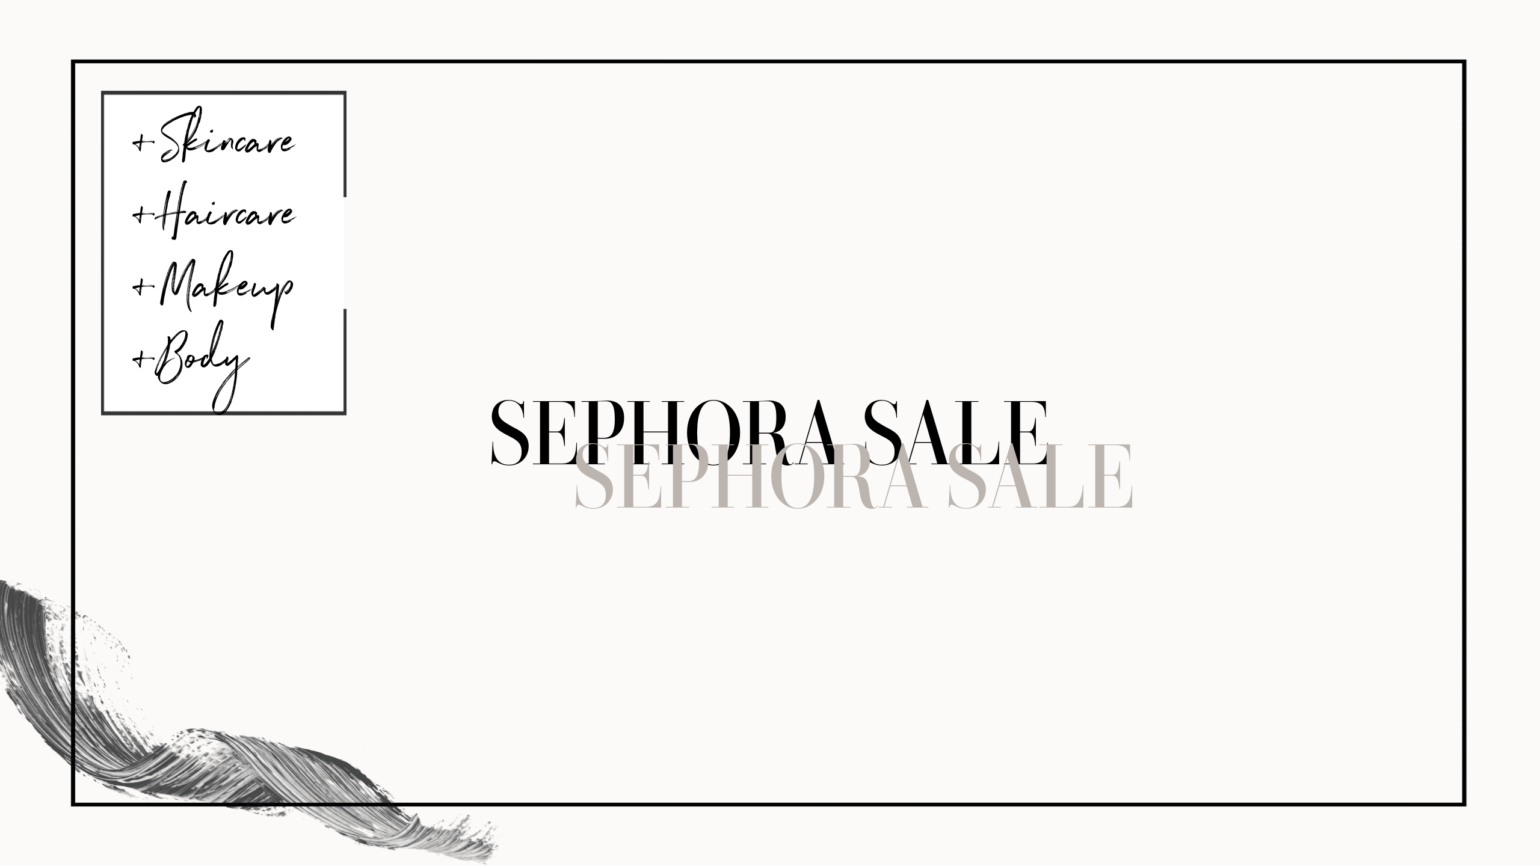 Your Guide to The 2021 Sephora Sale Jessica Dlugosz